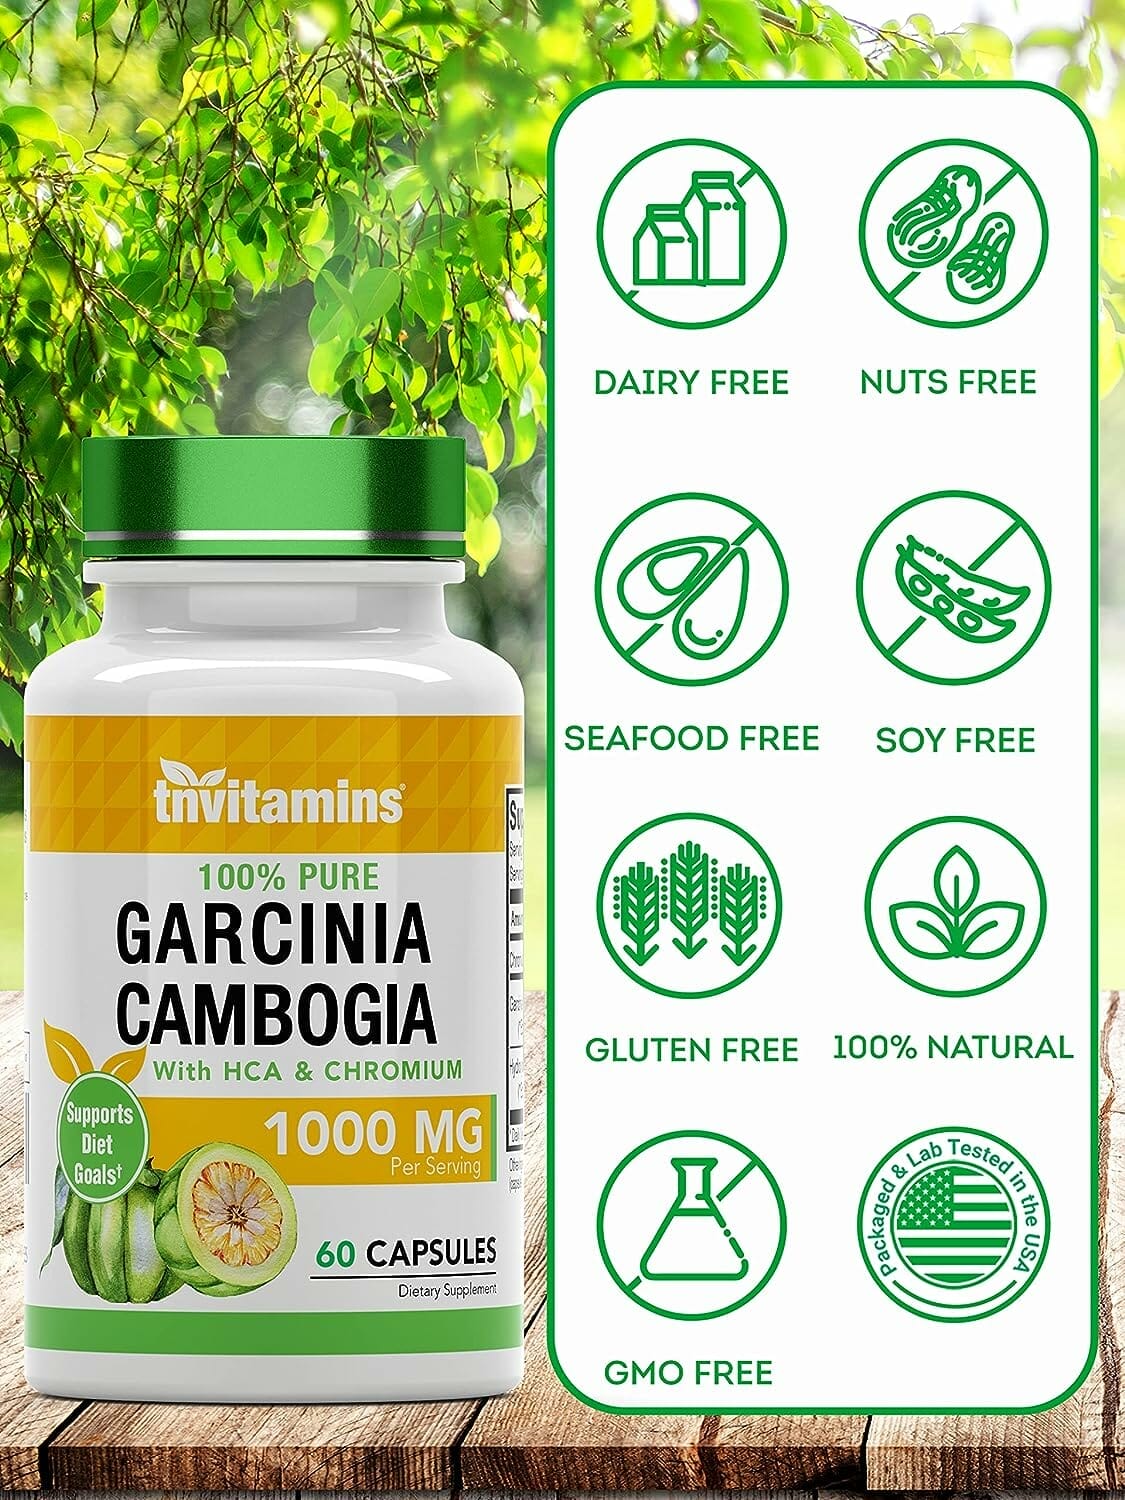 tnvitamins garcinia cambogia extract capsules 1000 mg x 60 pills with hca chromium weight loss pills for women men appet 4 1